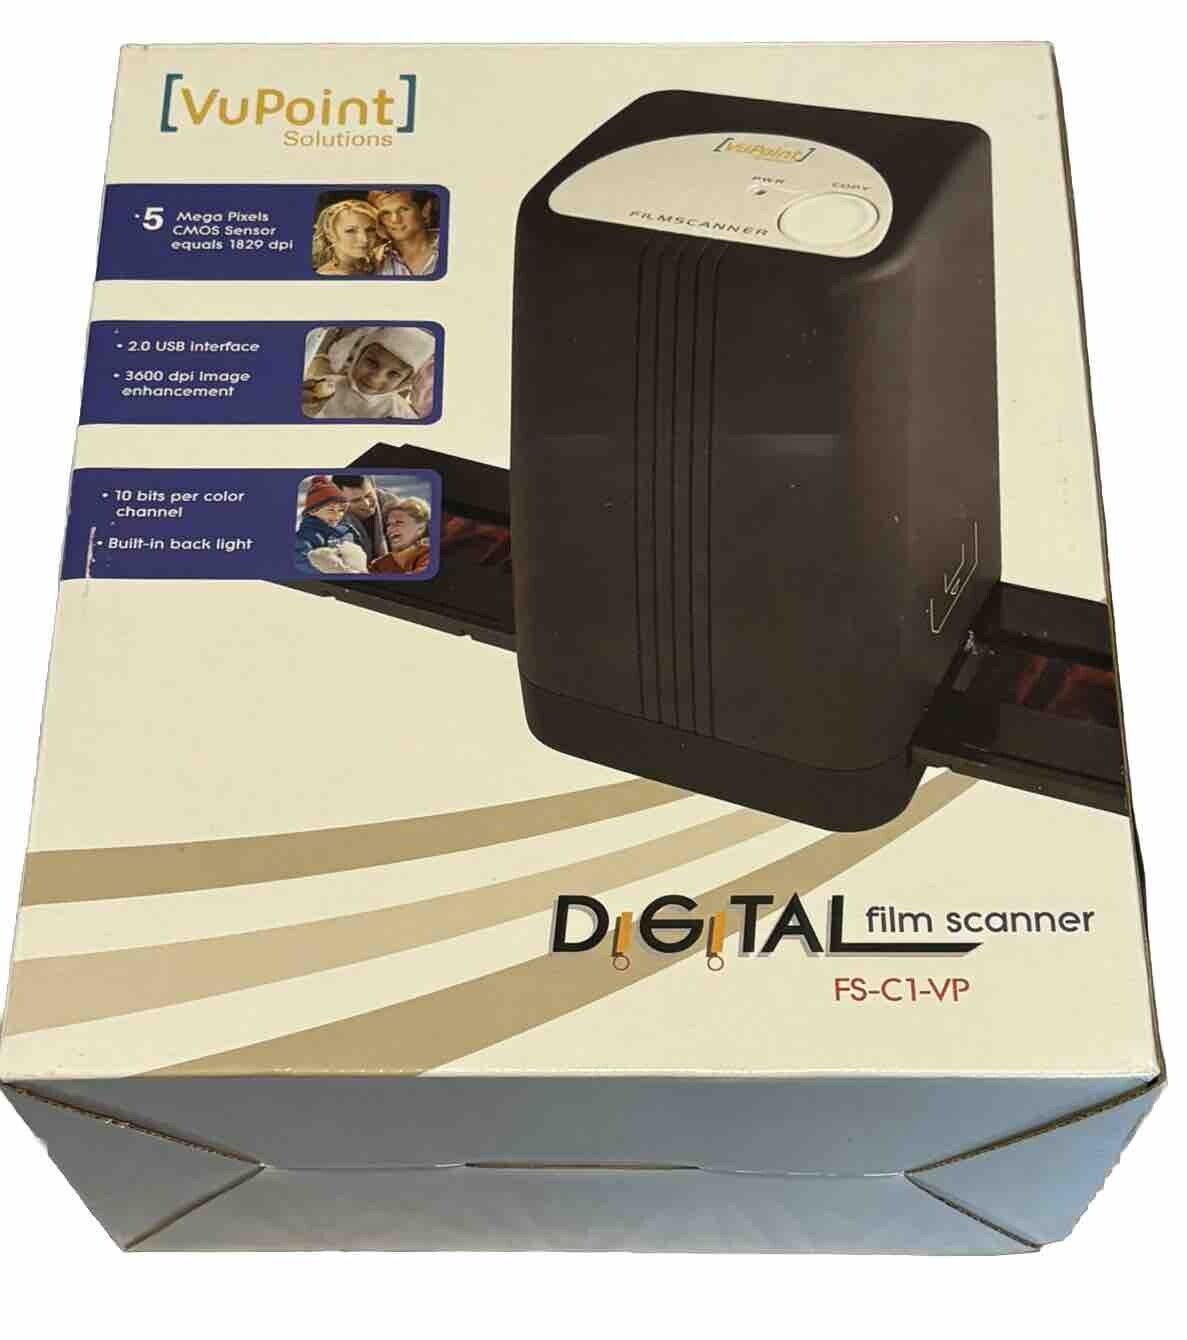 VuPoint Solutions Digital Film Scanner FS-C1-VP